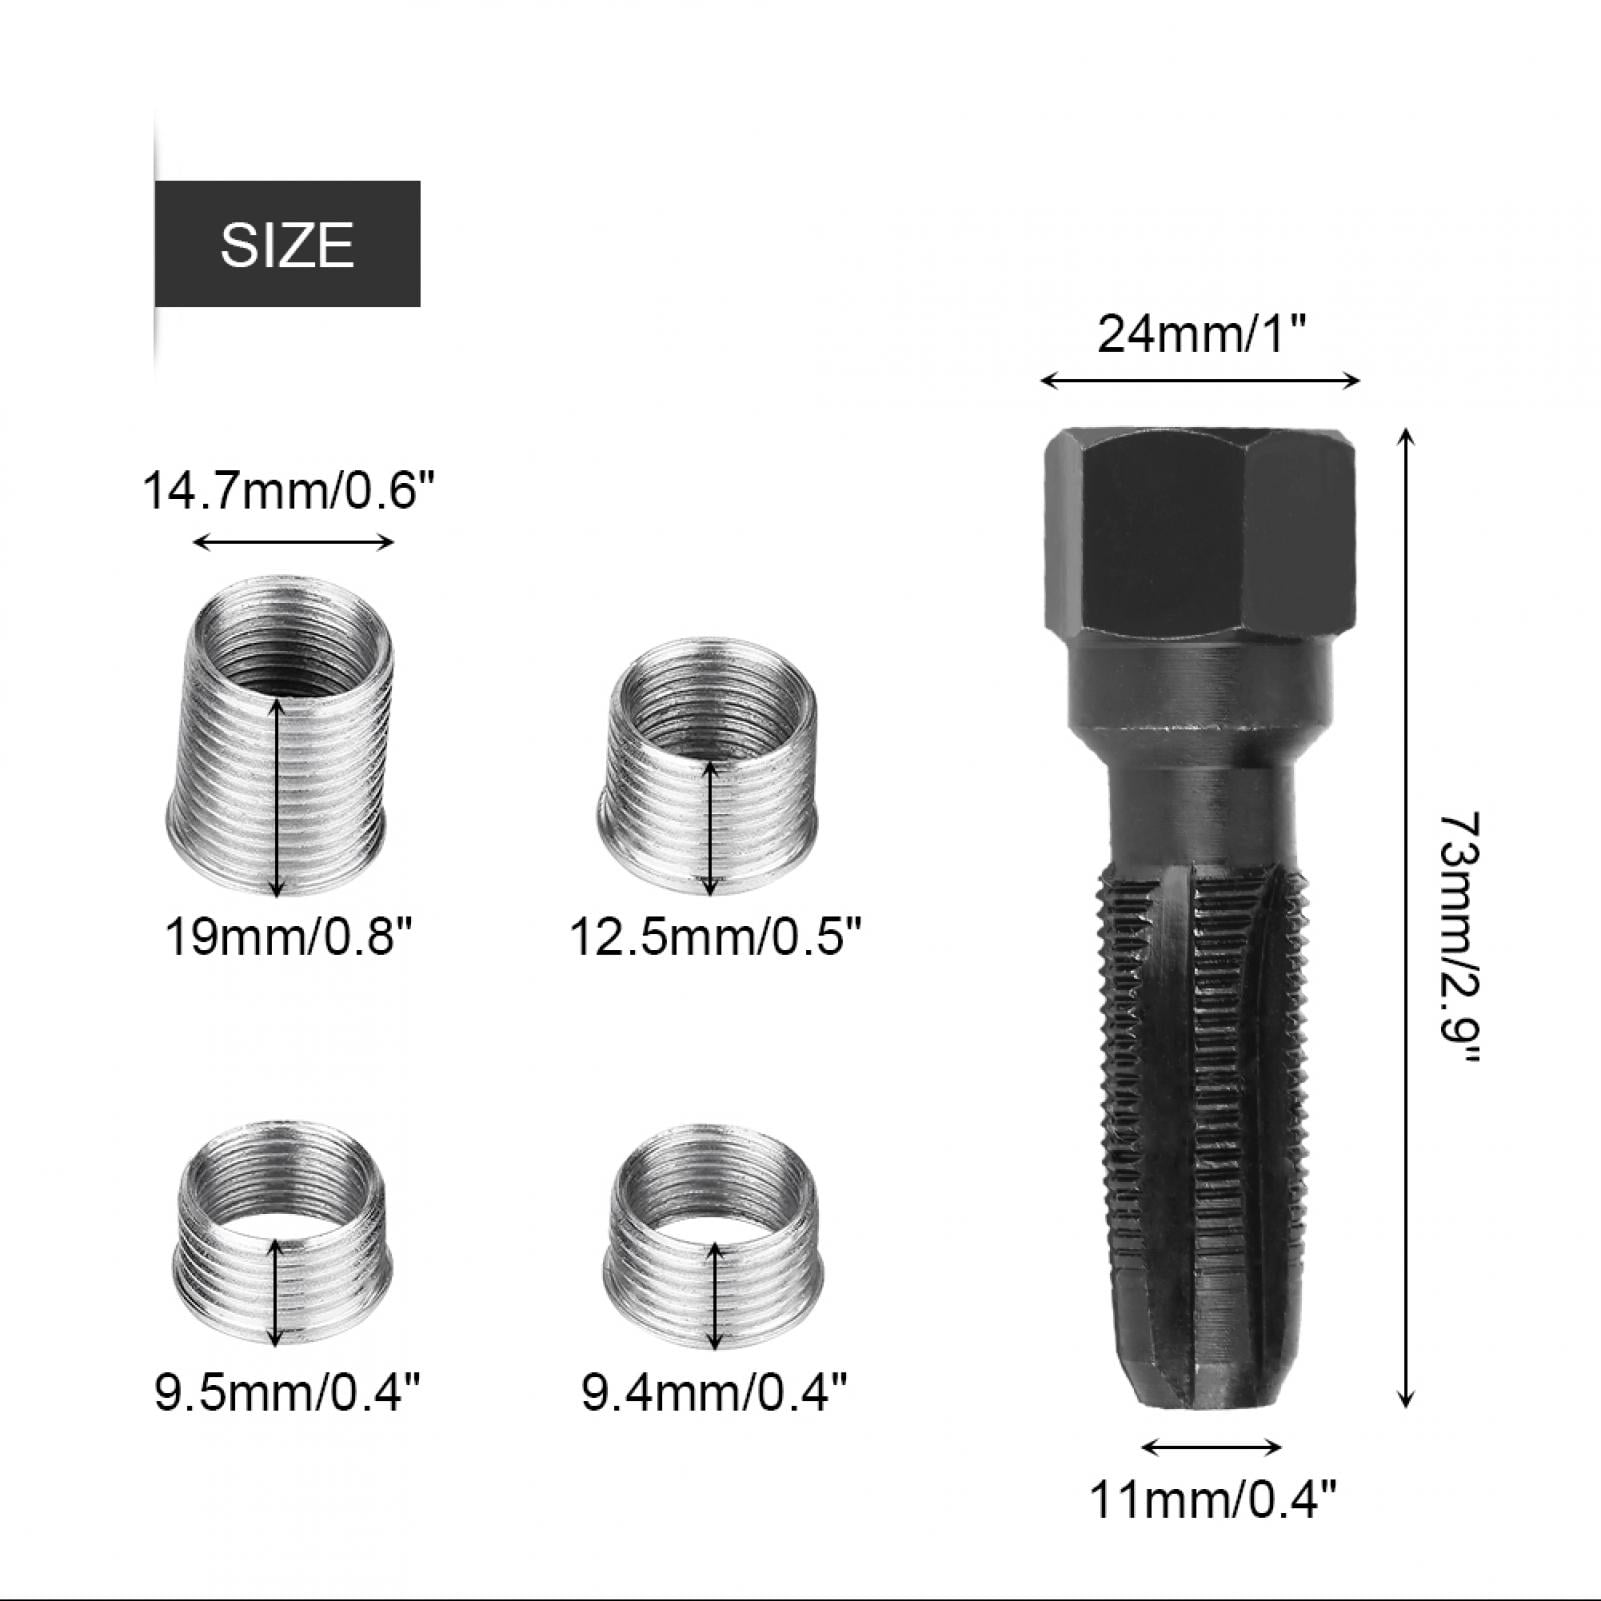 QWORK Spark Plug Tool Tap Tool 2 Pcs Carbon Steel Spark Plug Thread Insert Tap Set M10*1.0 / M12*1.25 M14*1.5 / M18*1.5 